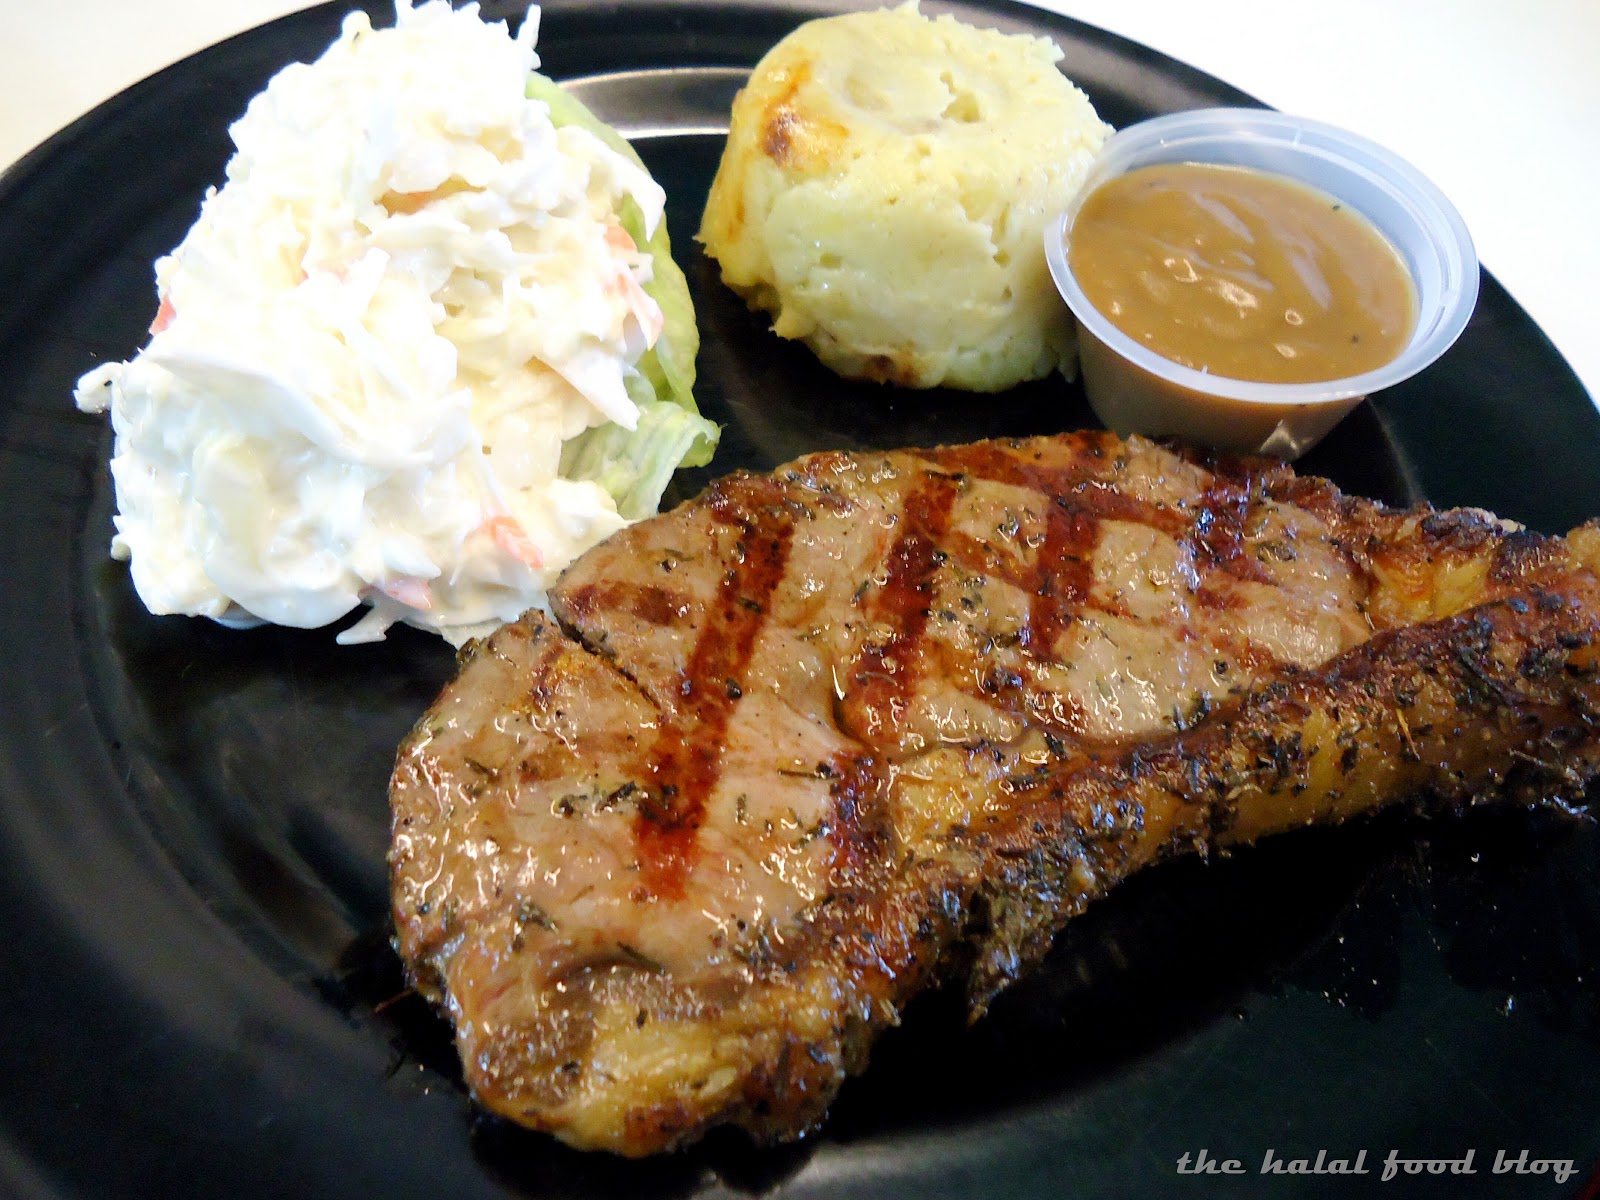 The Halal Food Blog: Botak's Favourites: Sirloin Steak